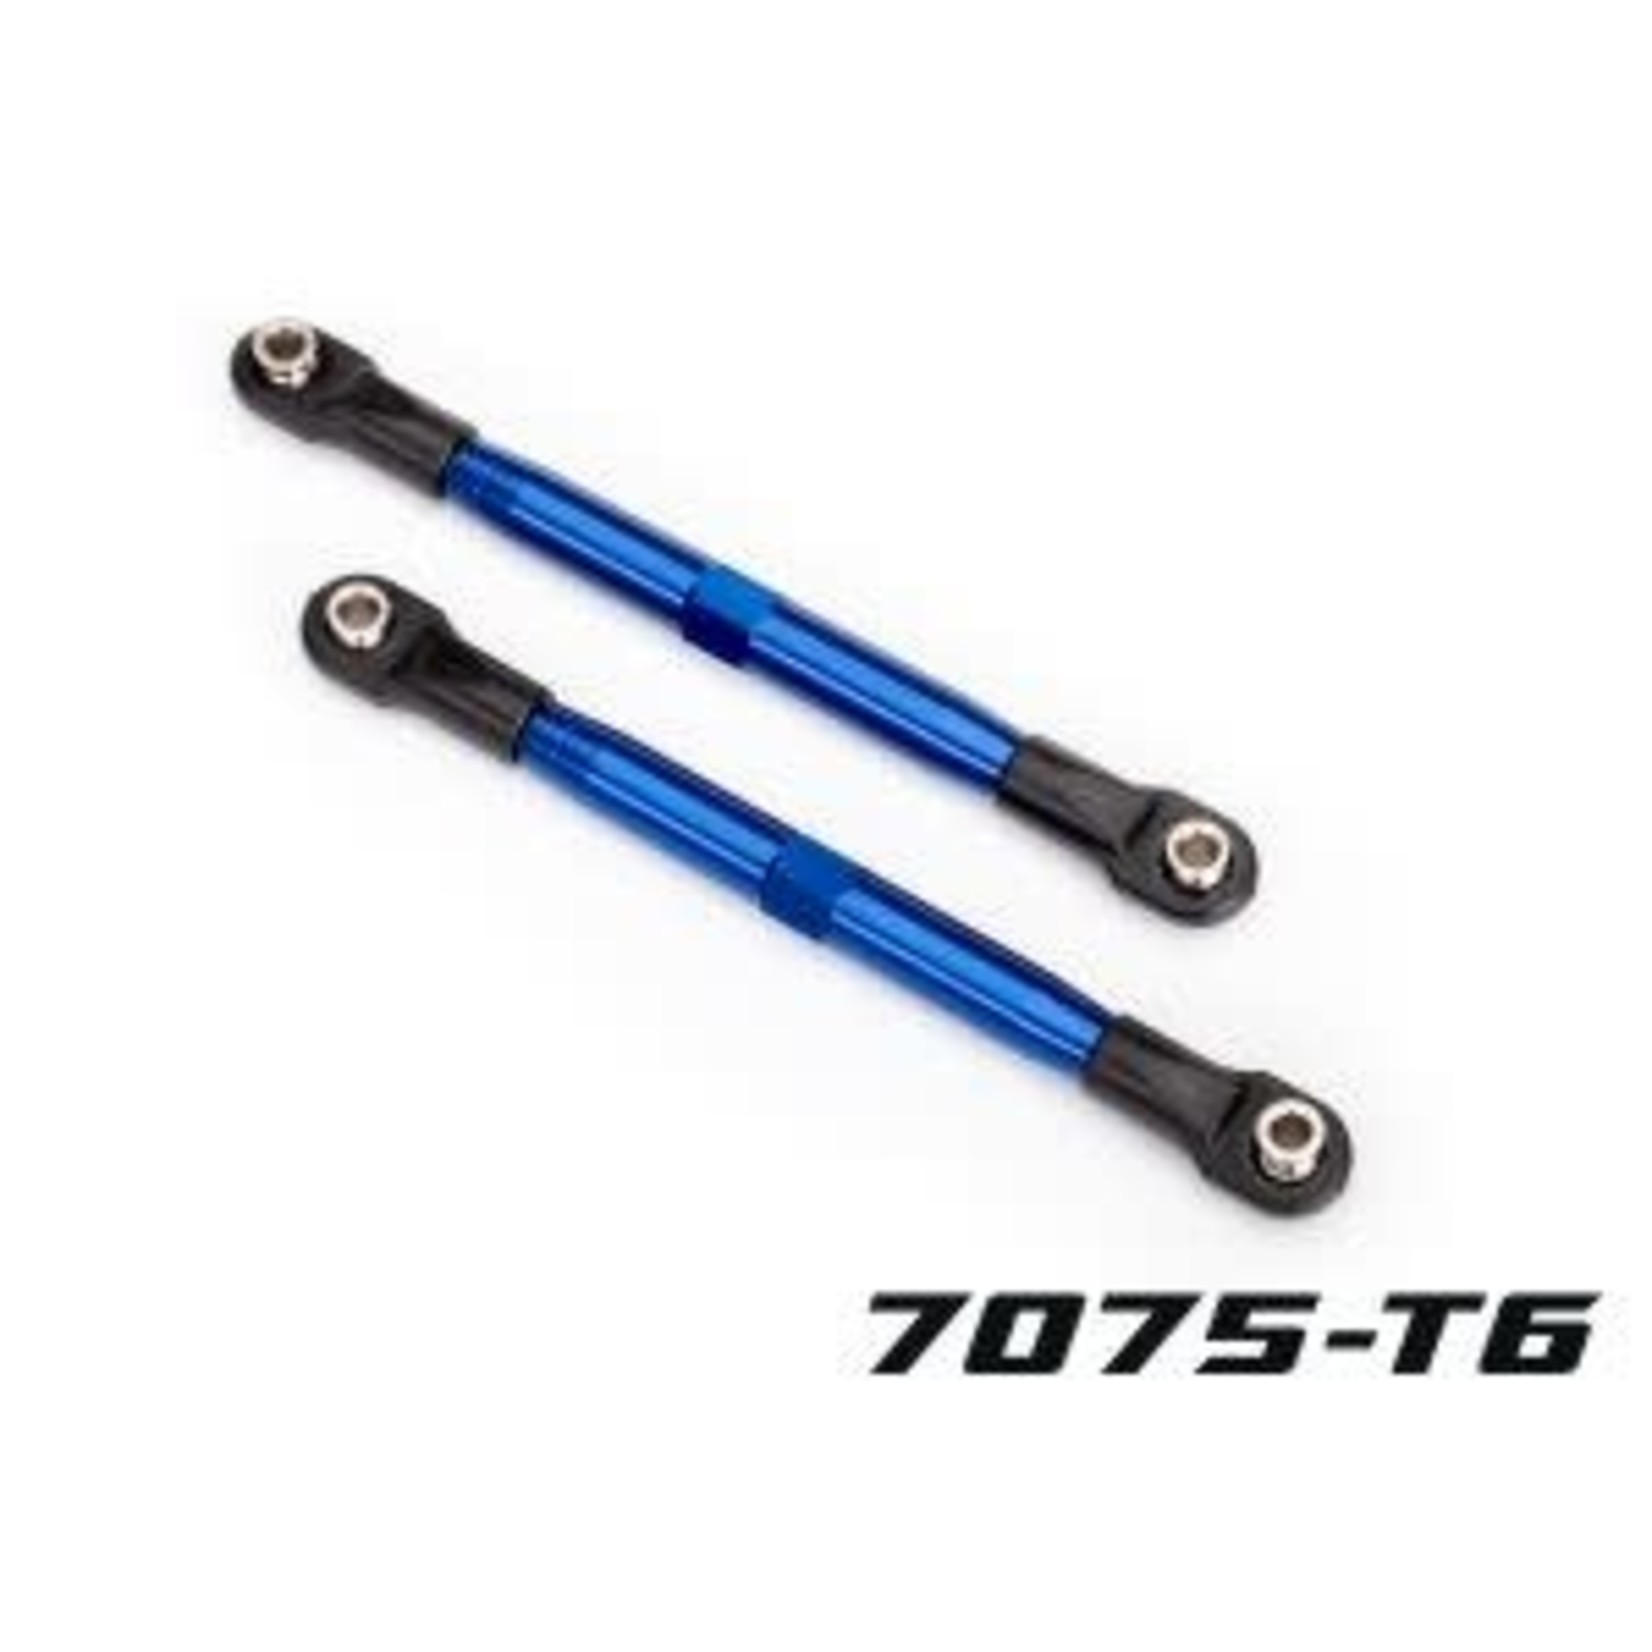 Traxxas 6742X Toe links (TUBES blue-anodized, 7075-T6 aluminum, stronger than titanium) (87mm) (2)/ rod ends (4)/ aluminum wrench (1)